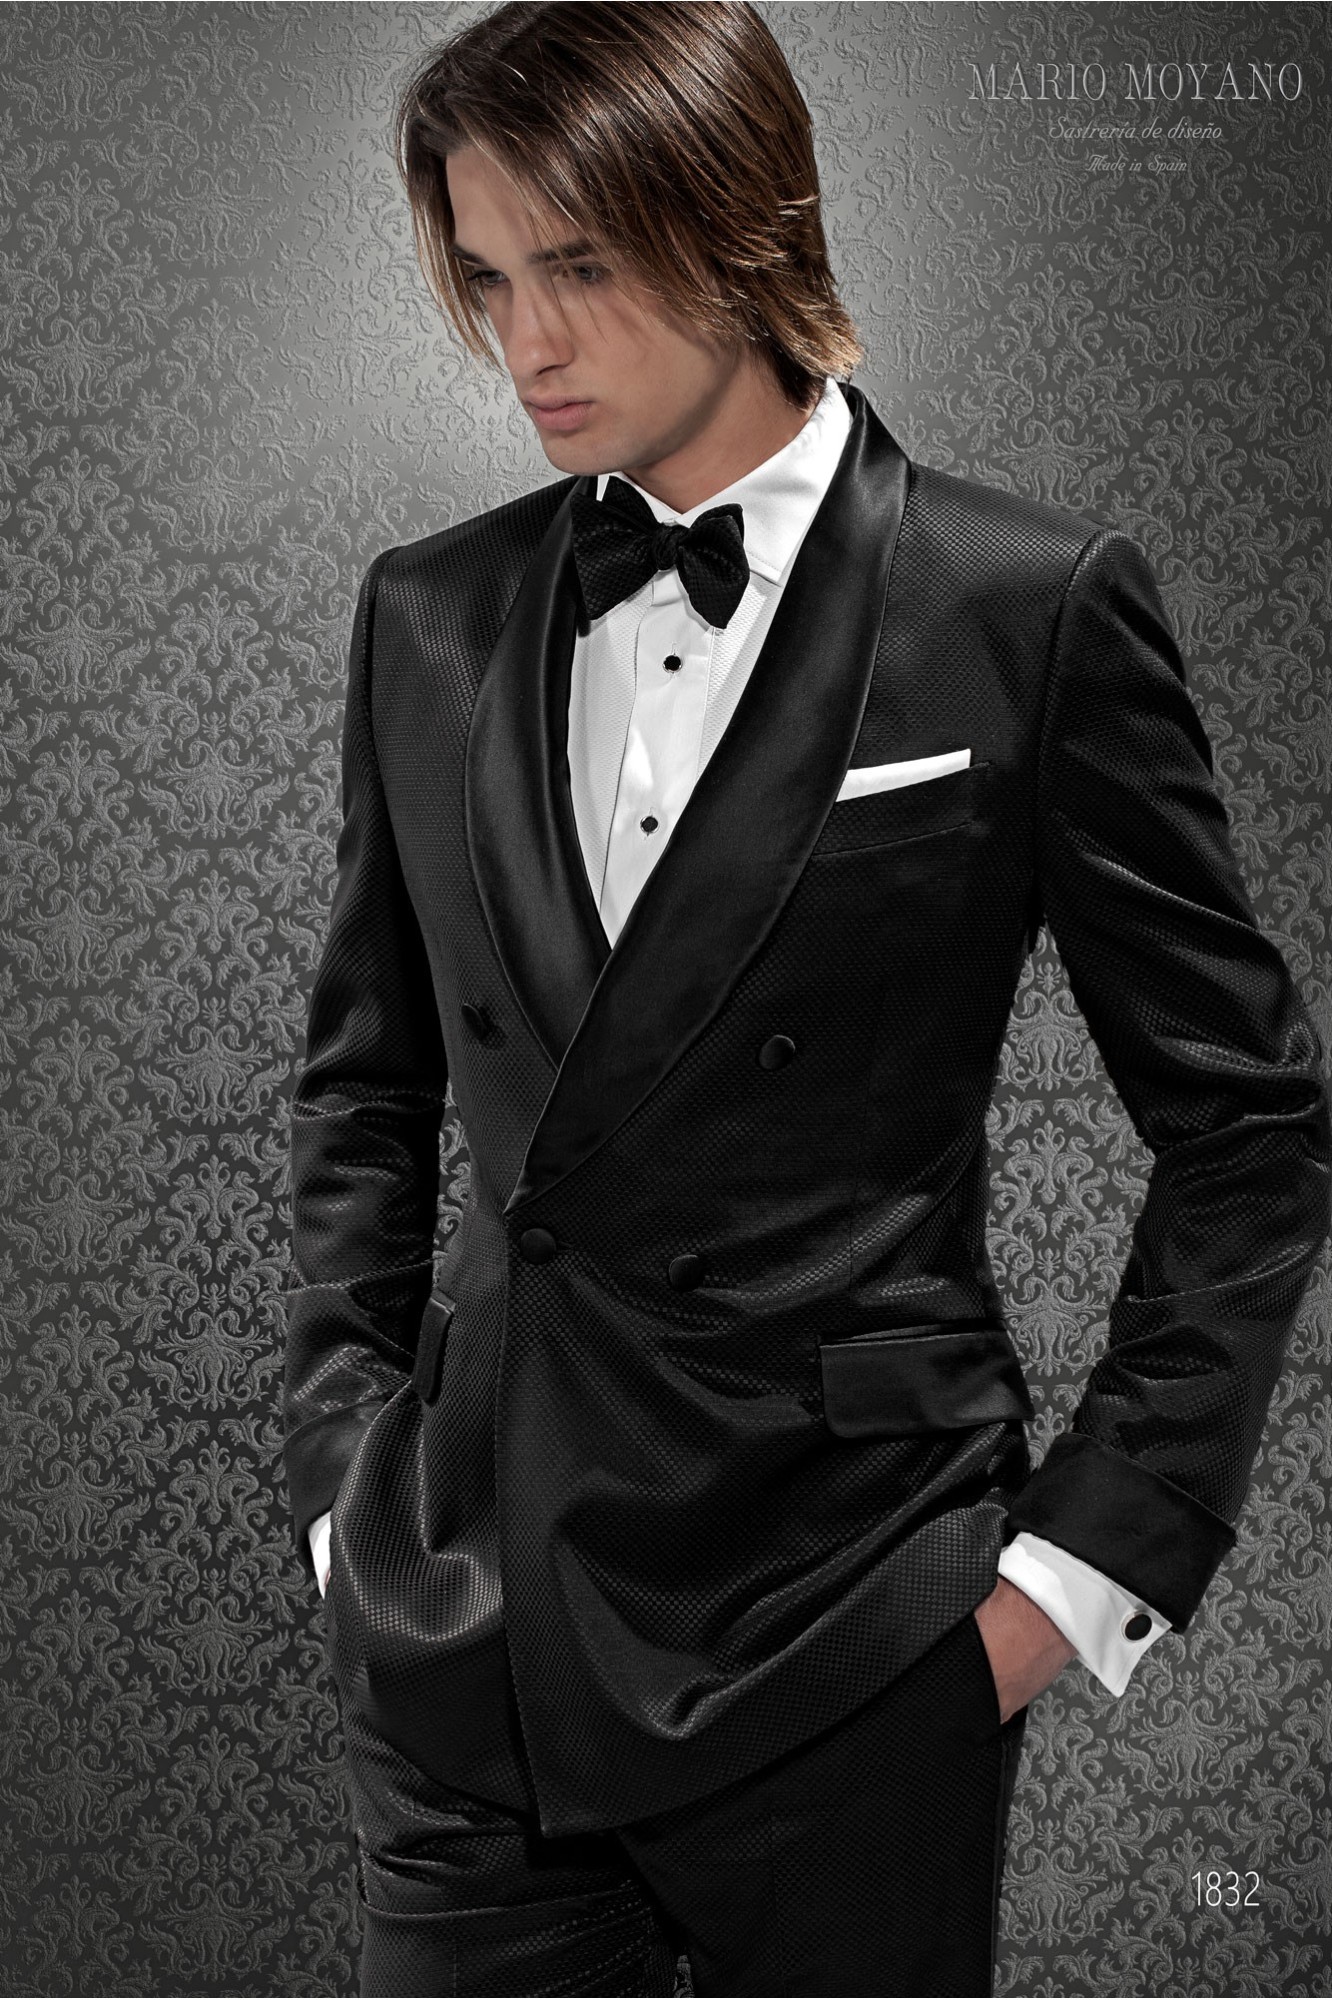 Black checked double-breasted tuxedo with satin black shawl lapels 1832 Mario Moyano